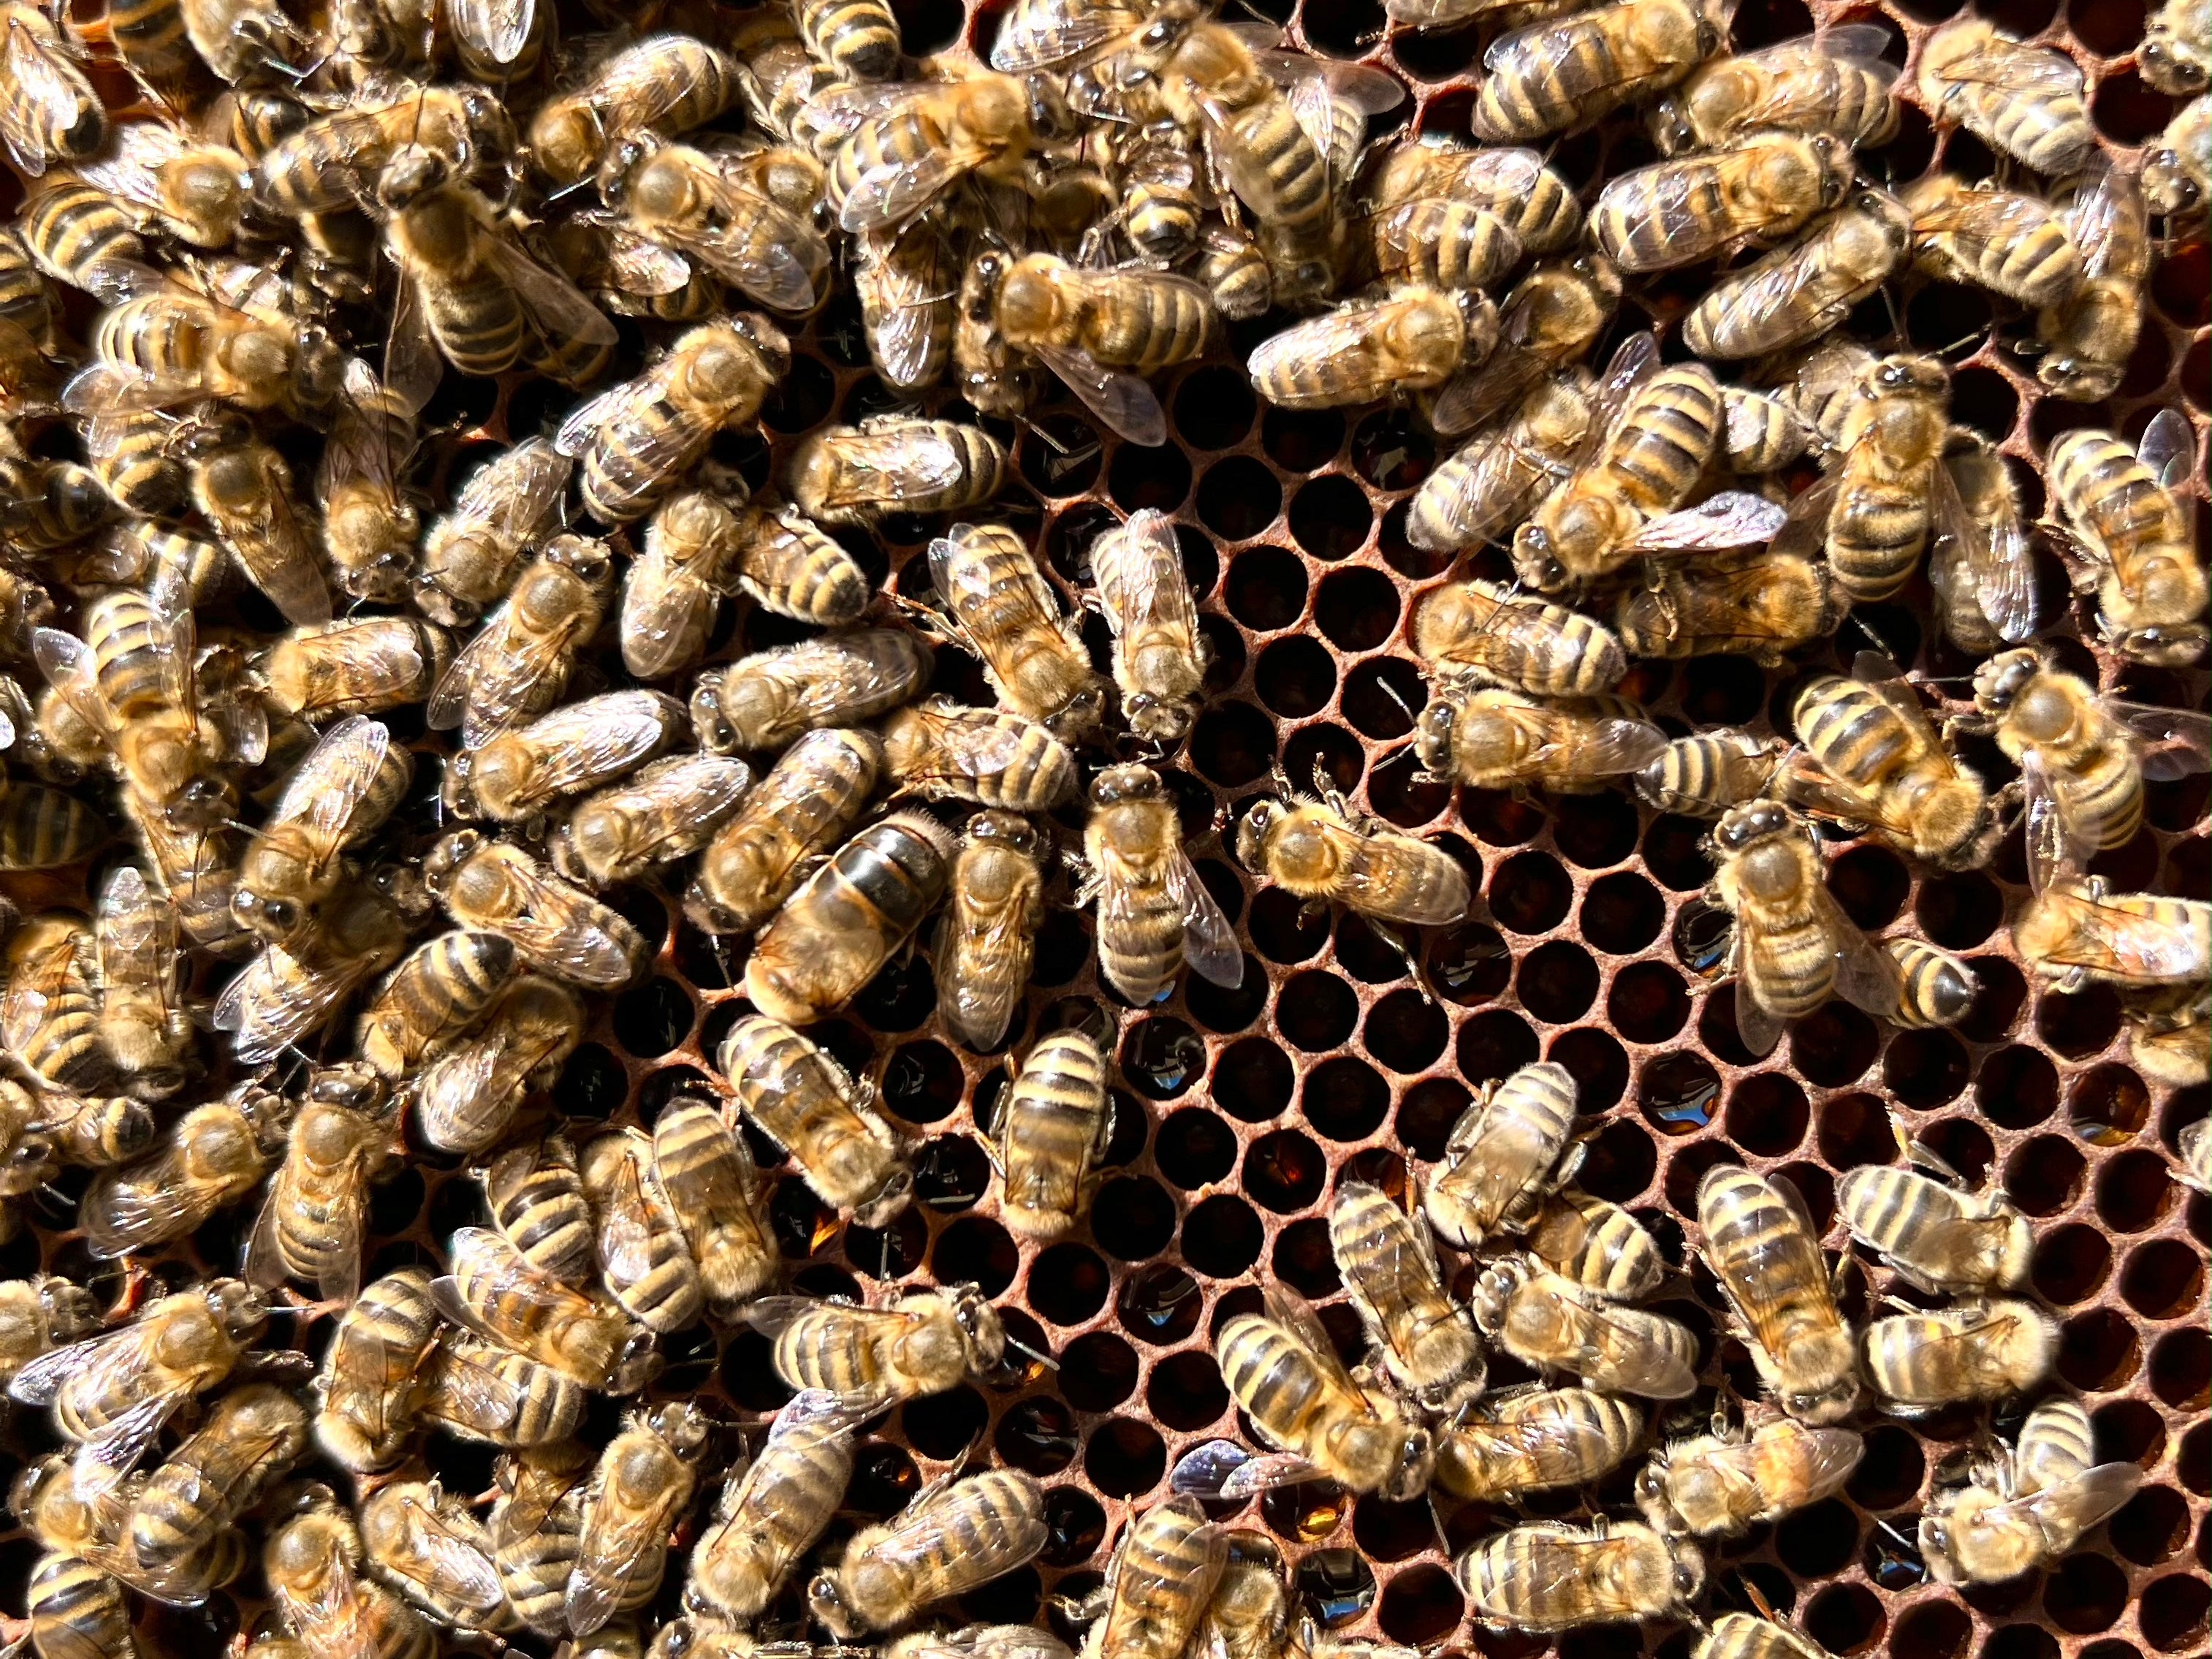 Evaluating bee season